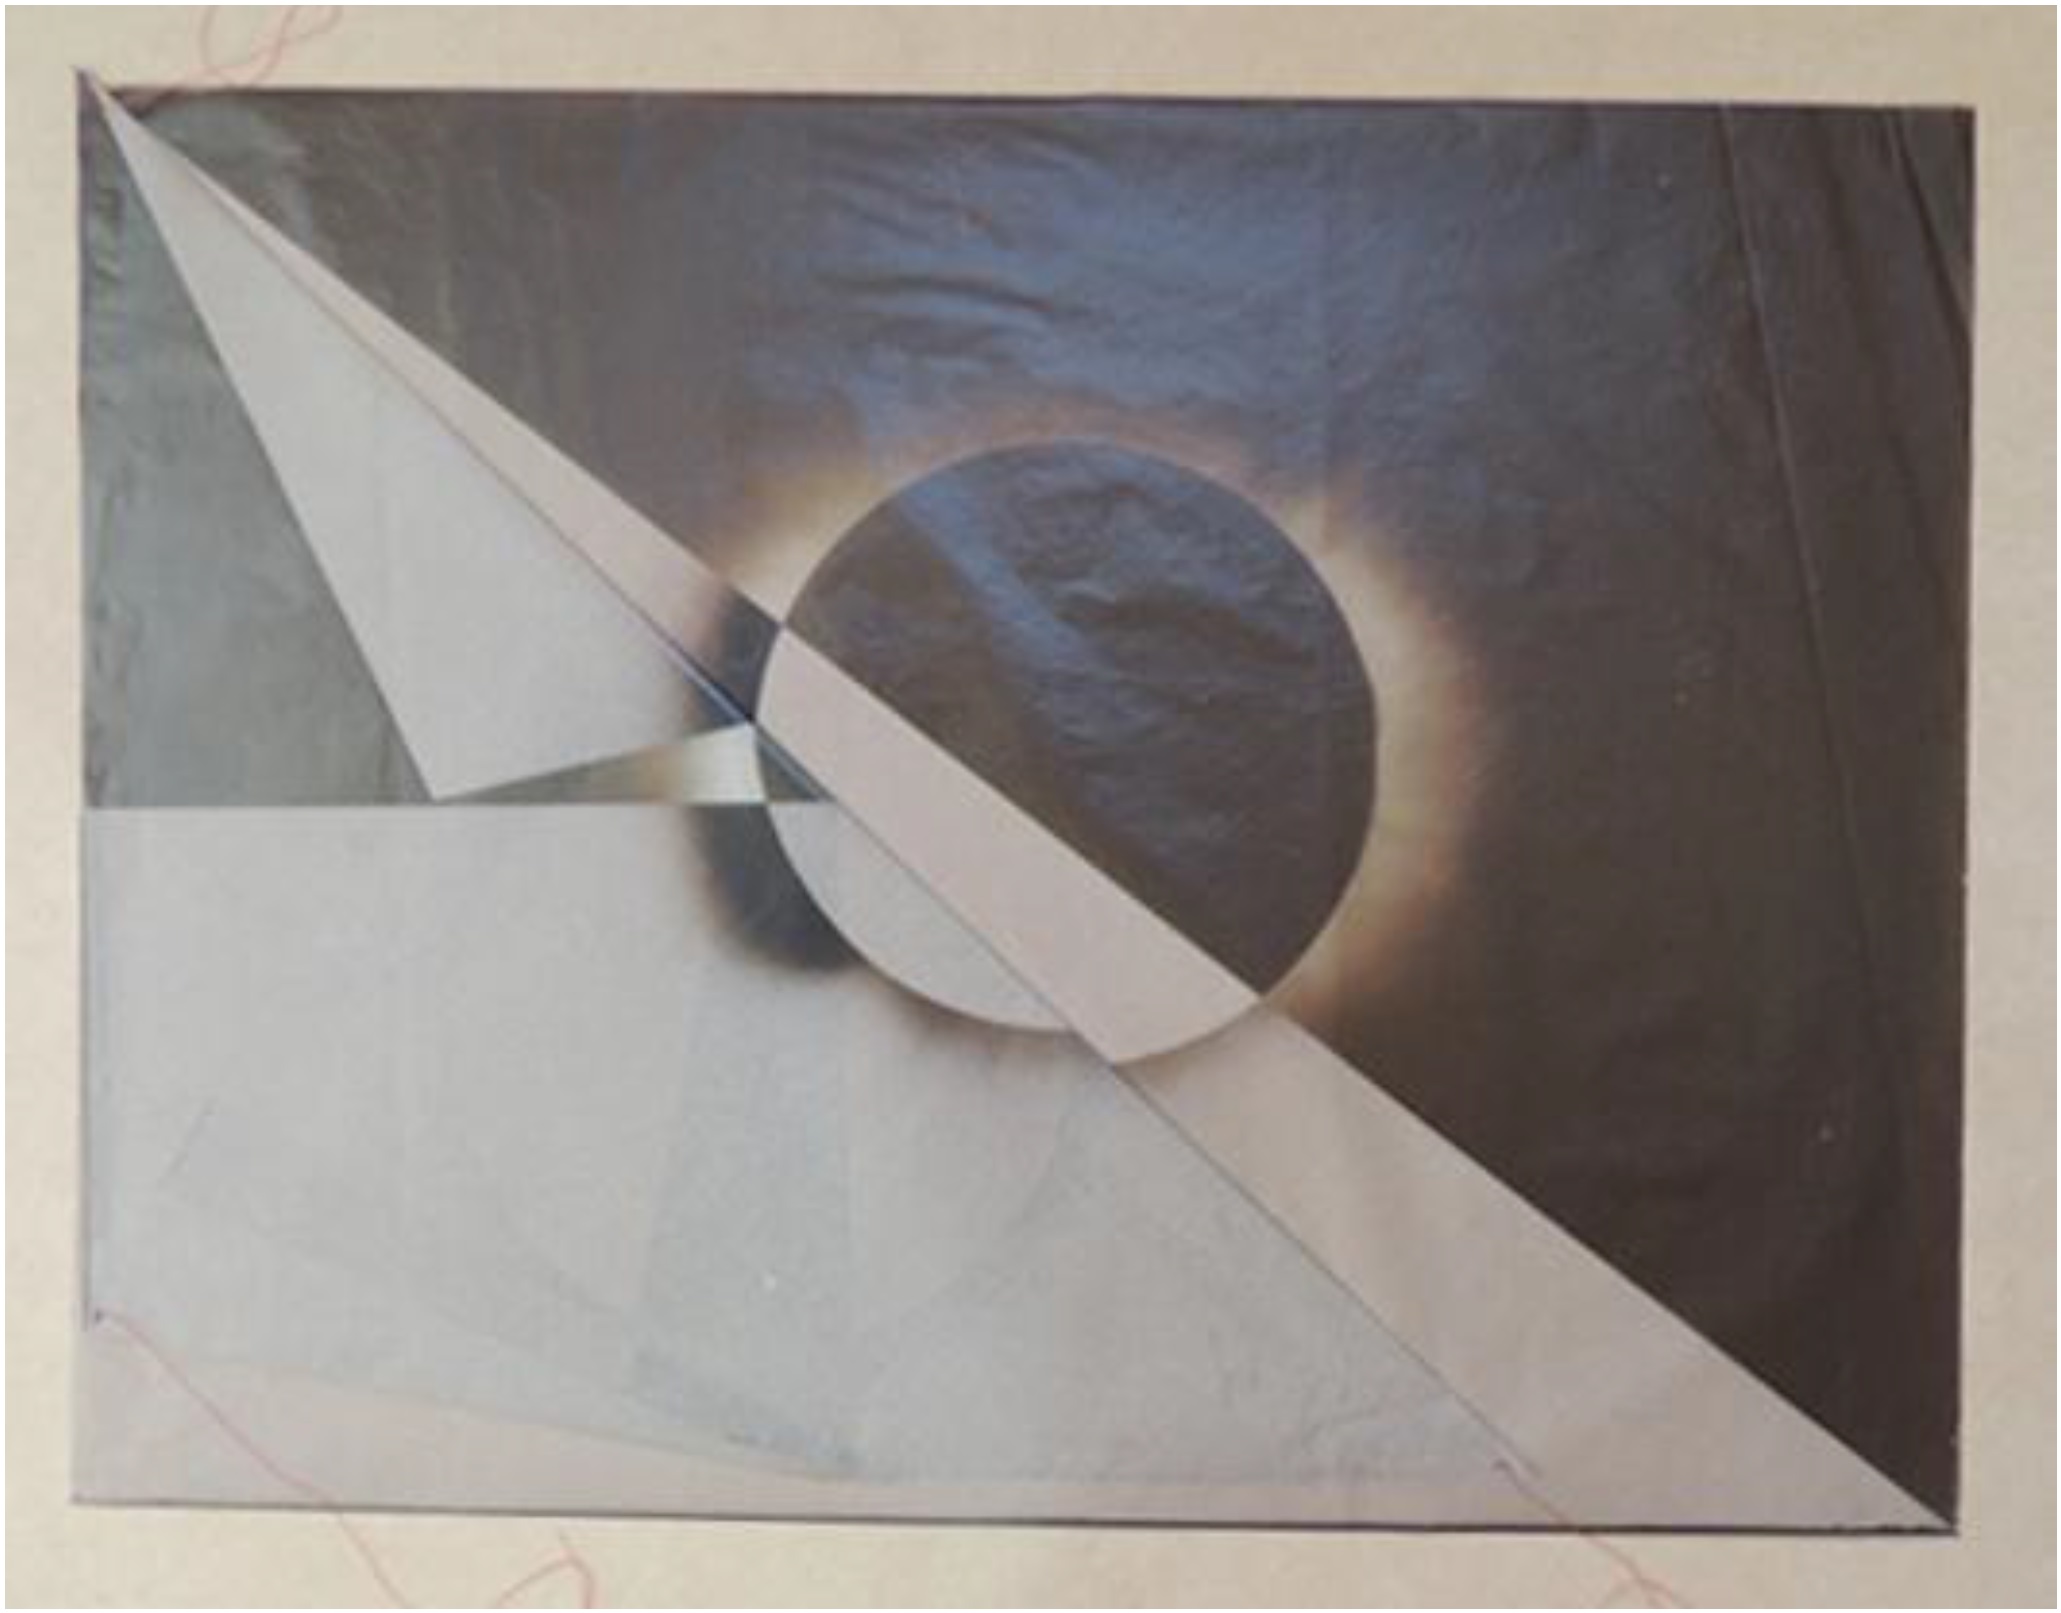 El Sol 1, 2016<br/>Impresión digital sobre papel cebolla / Inkjet print on onion paper